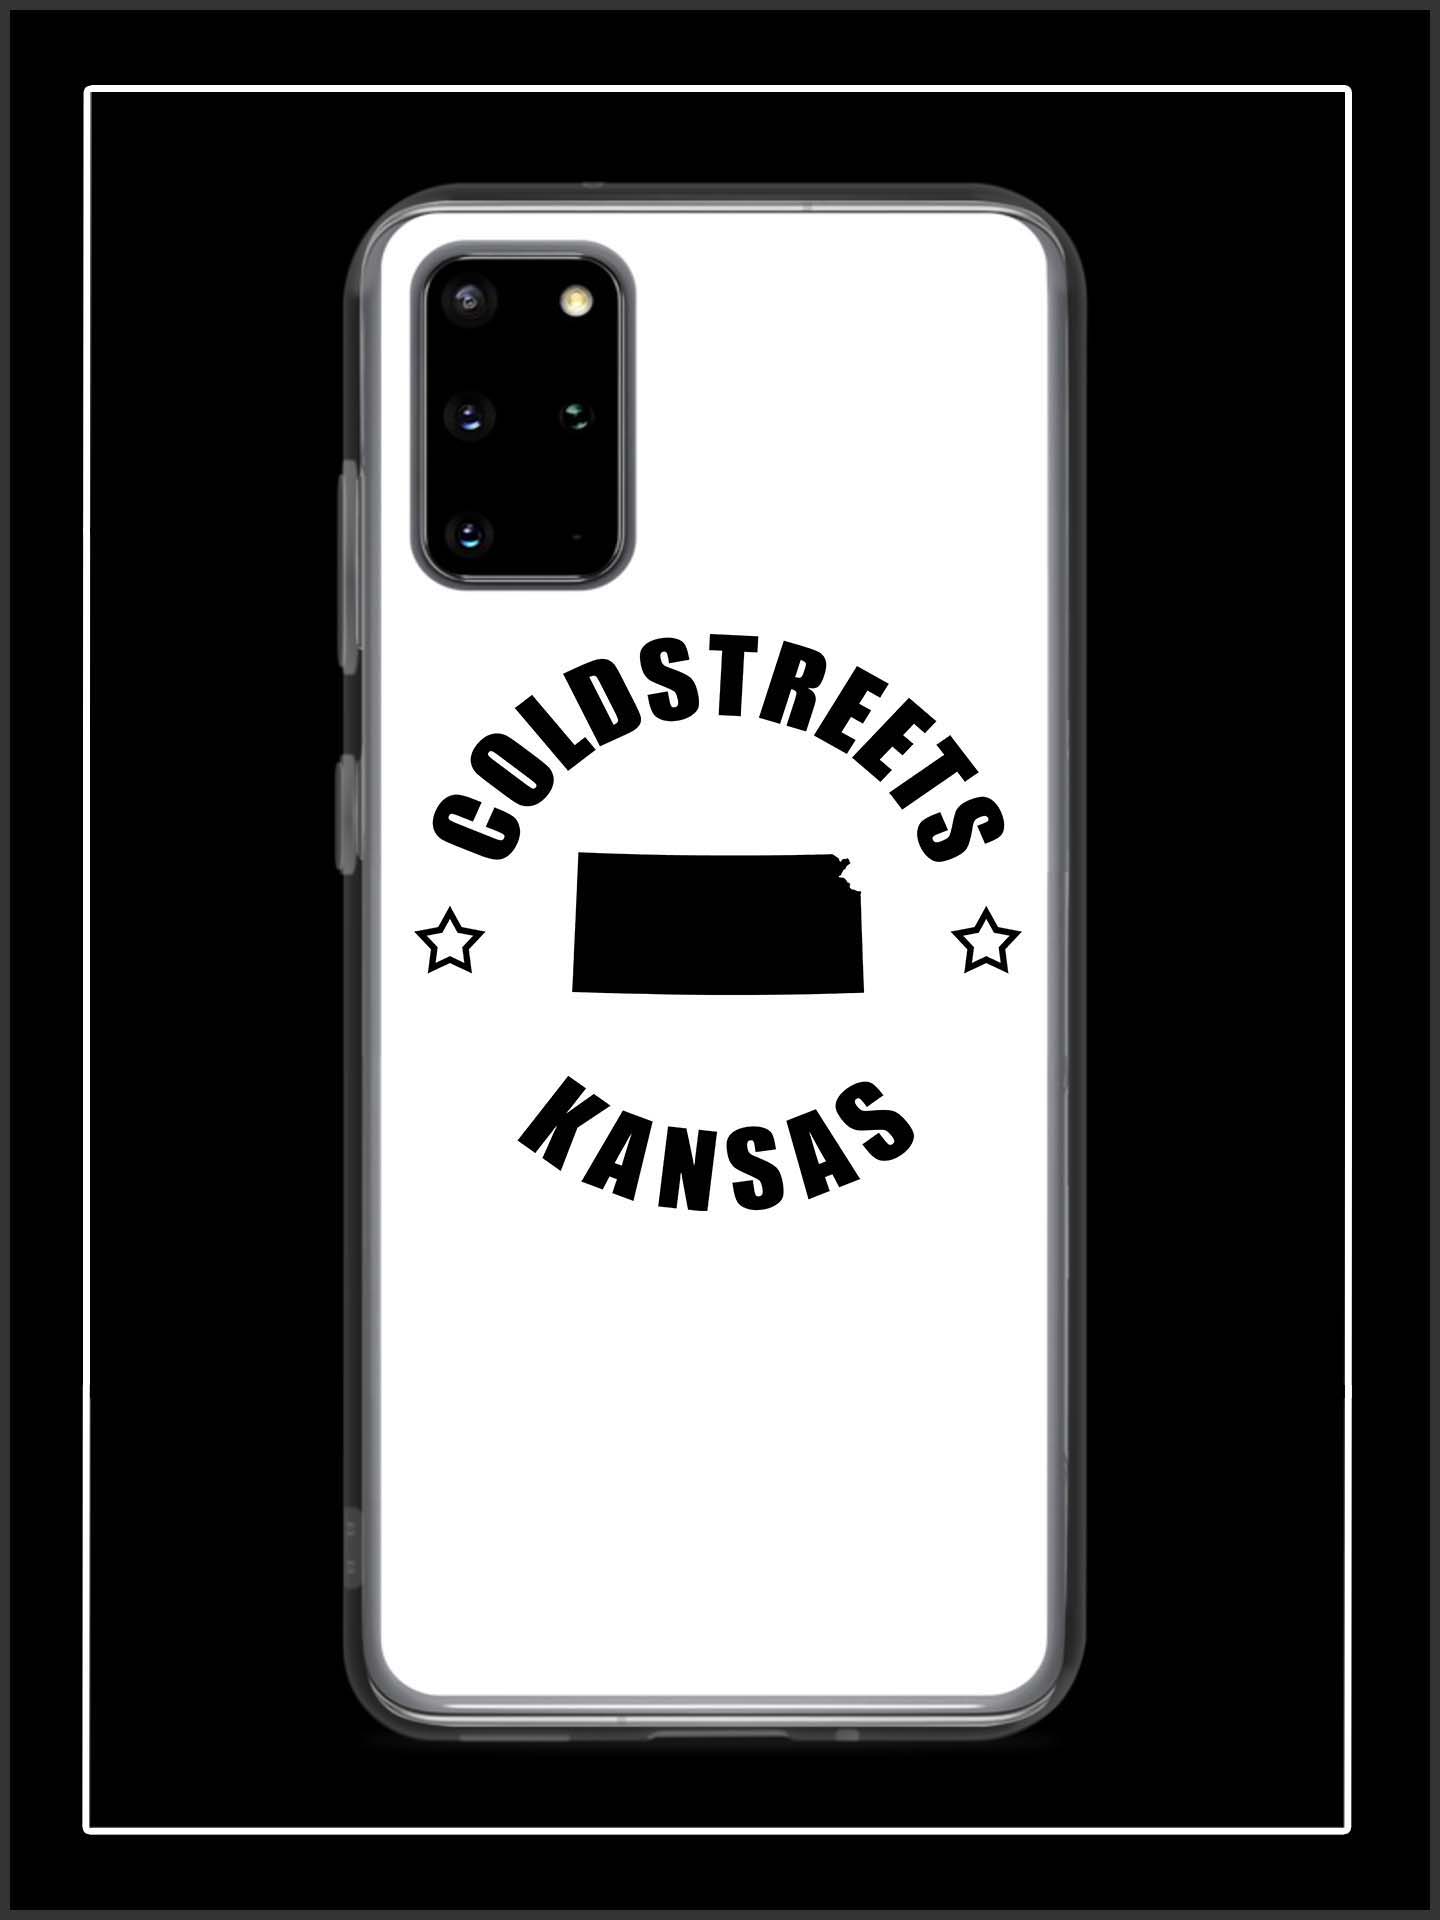 Cold Streets Kansas Samsung Cases